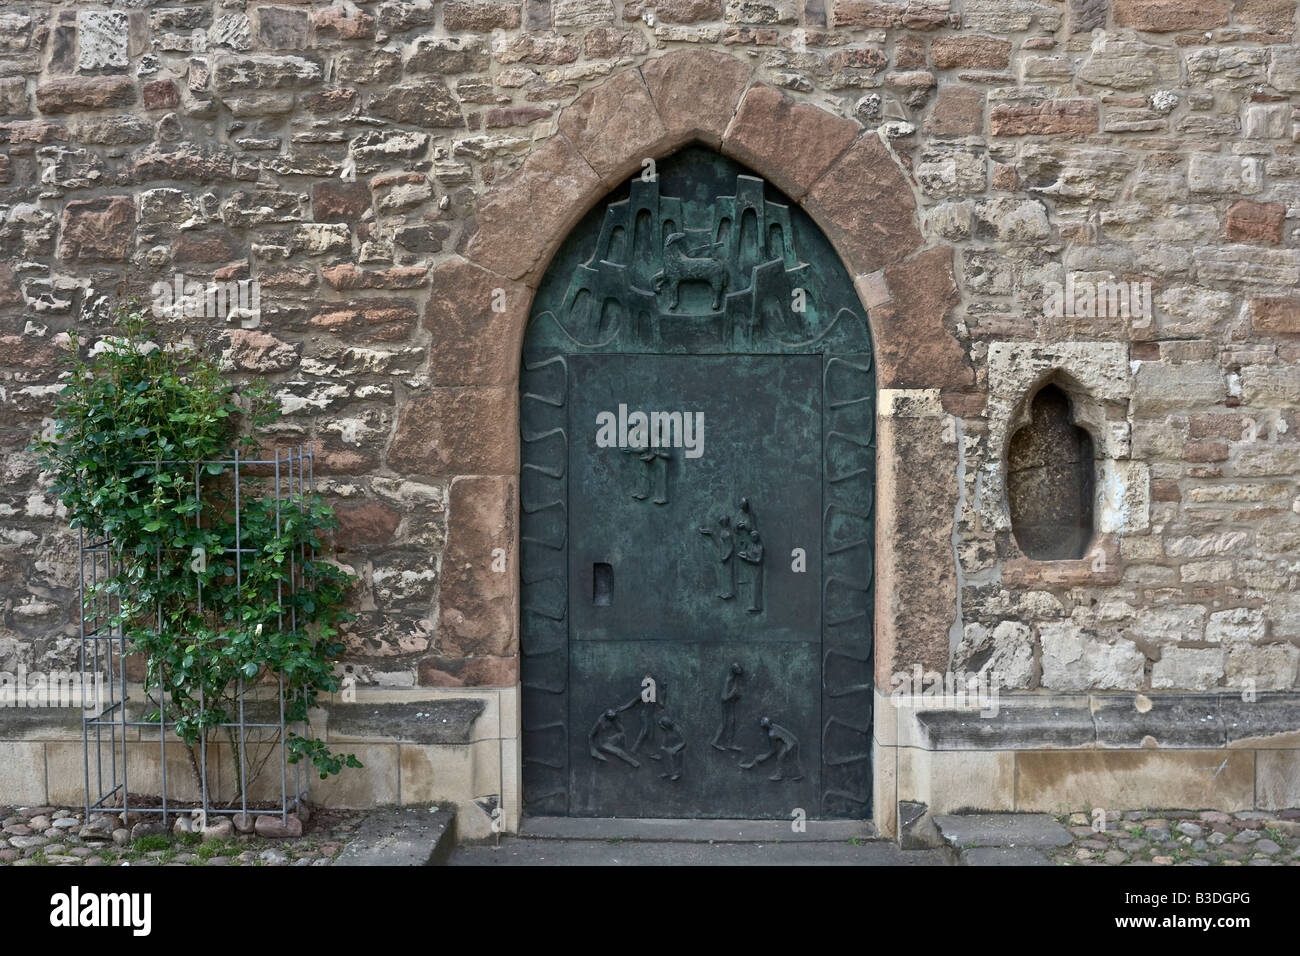 Stile moderno lato ingresso alla chiesa di St Magnus chiesa in Braunschweig, Germania. Foto Stock